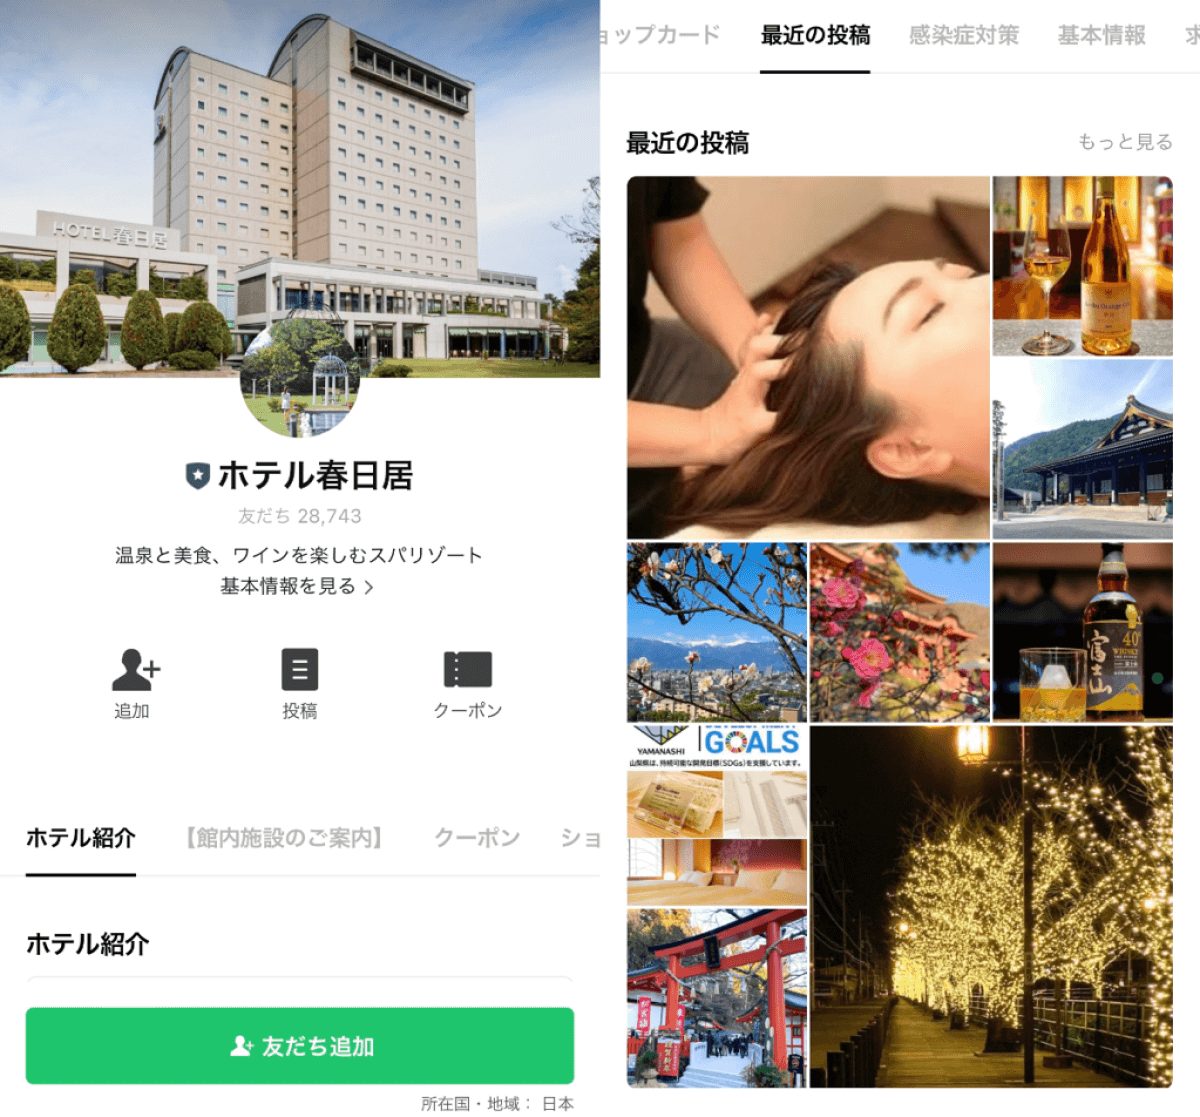 line-account-hotel-kasugai